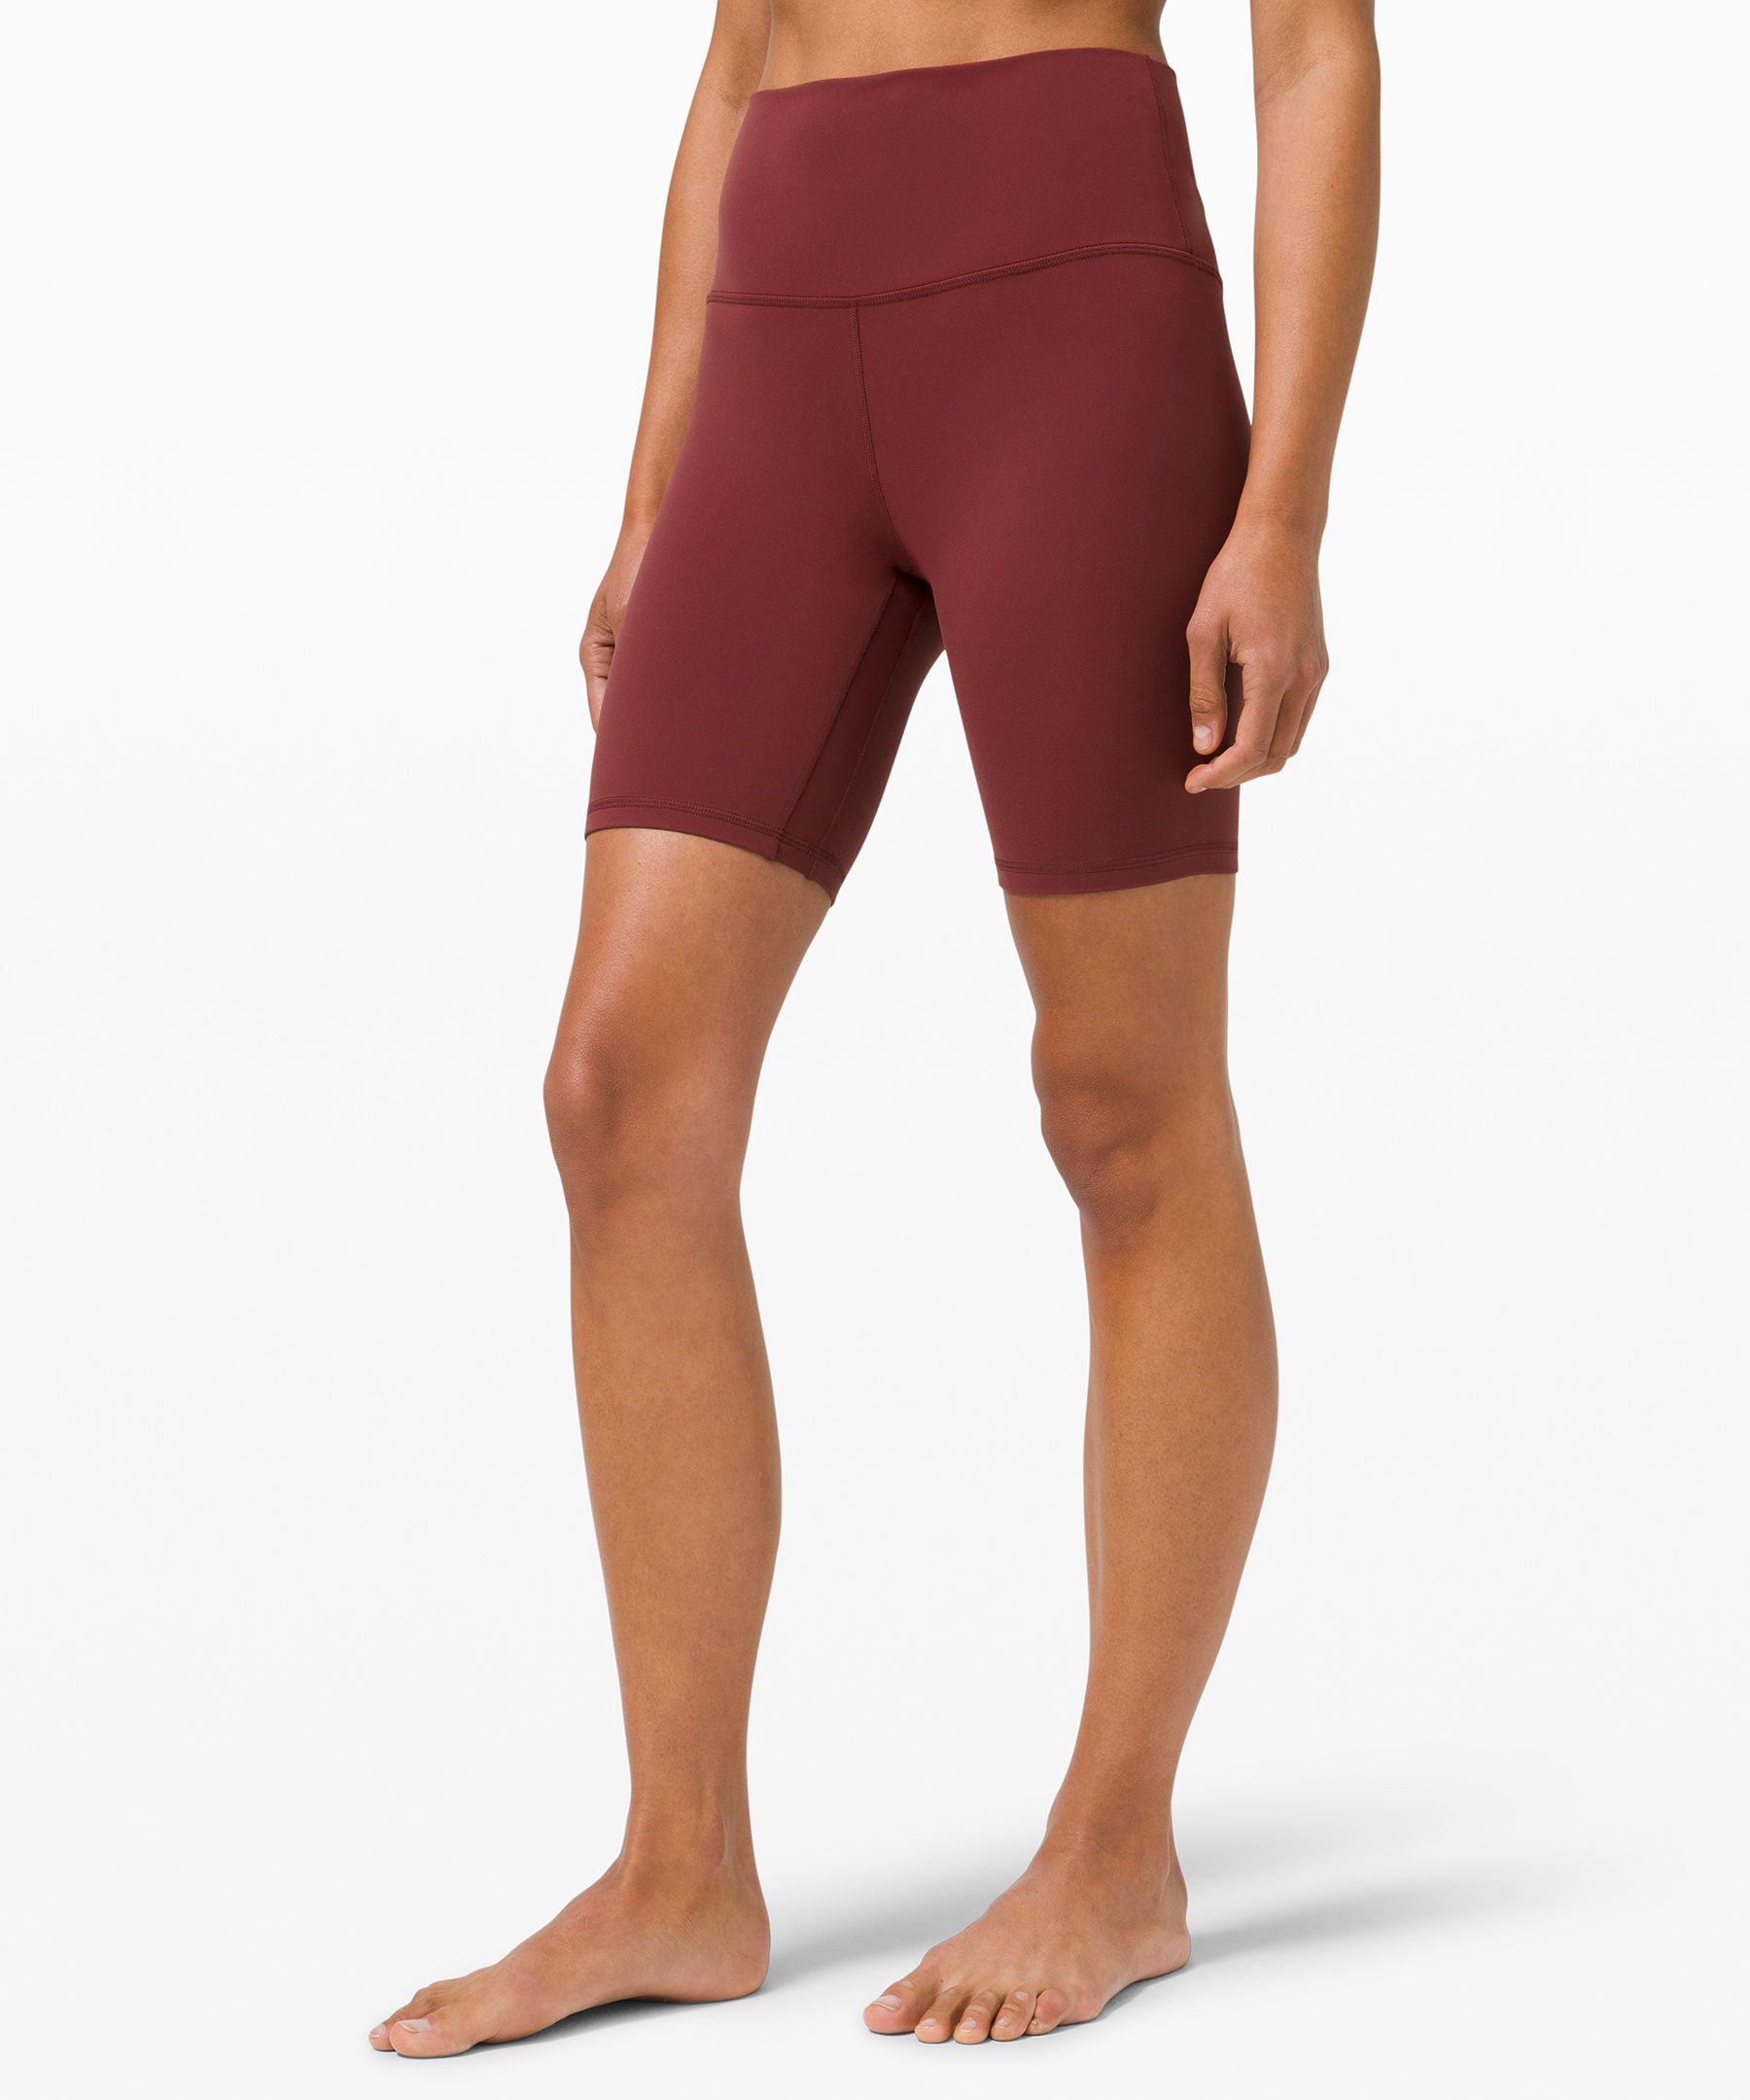 Lululemon Align™ High-rise Shorts 8"